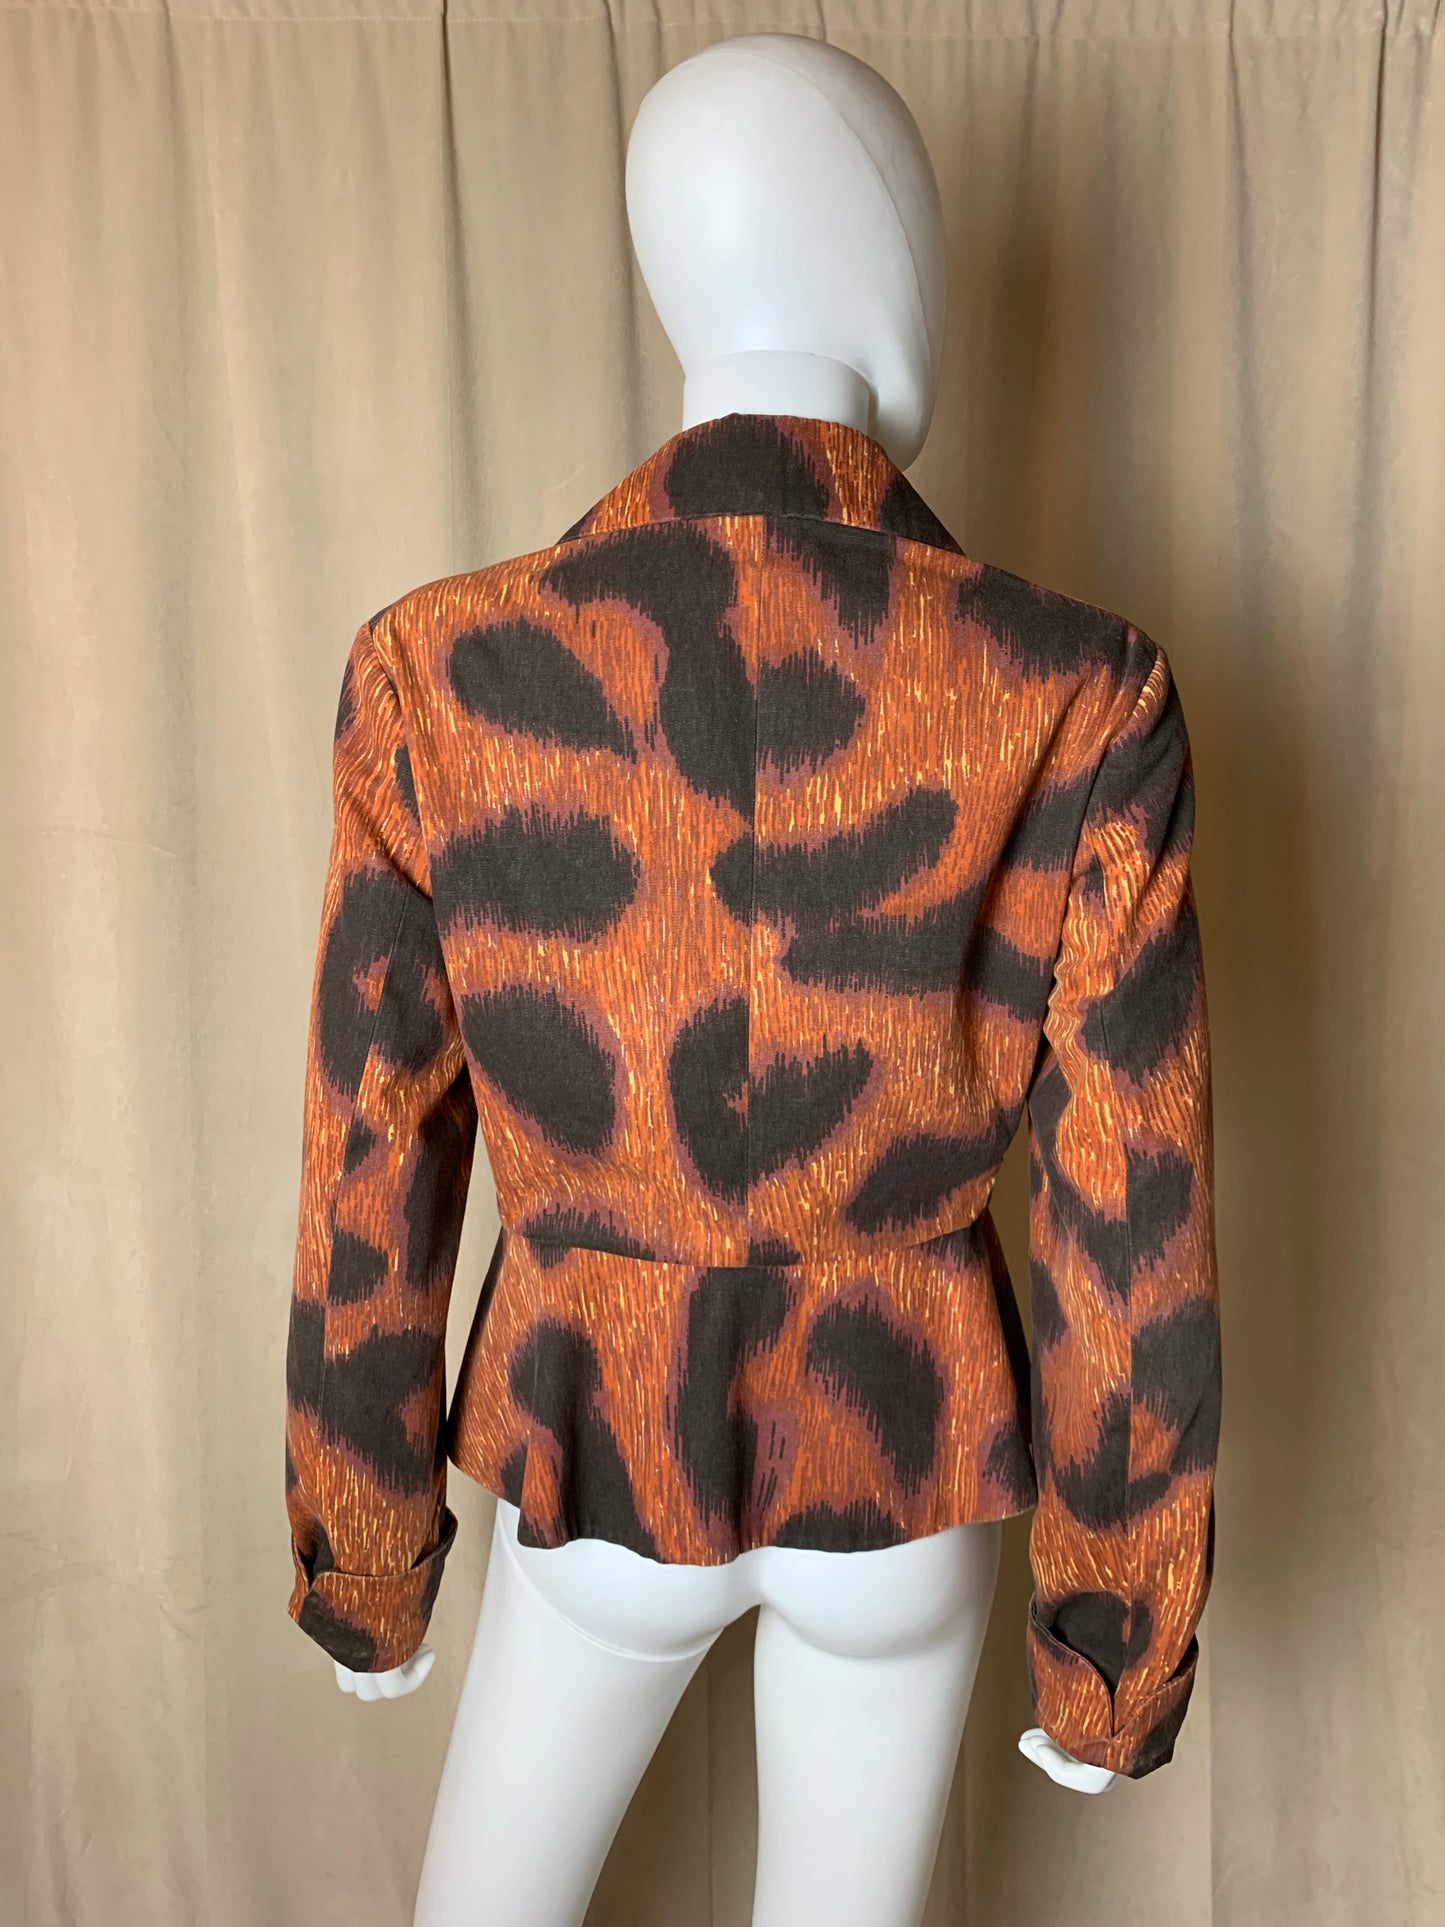 Vivienne Westwood SS 1994 Café Society Leopard Jacket